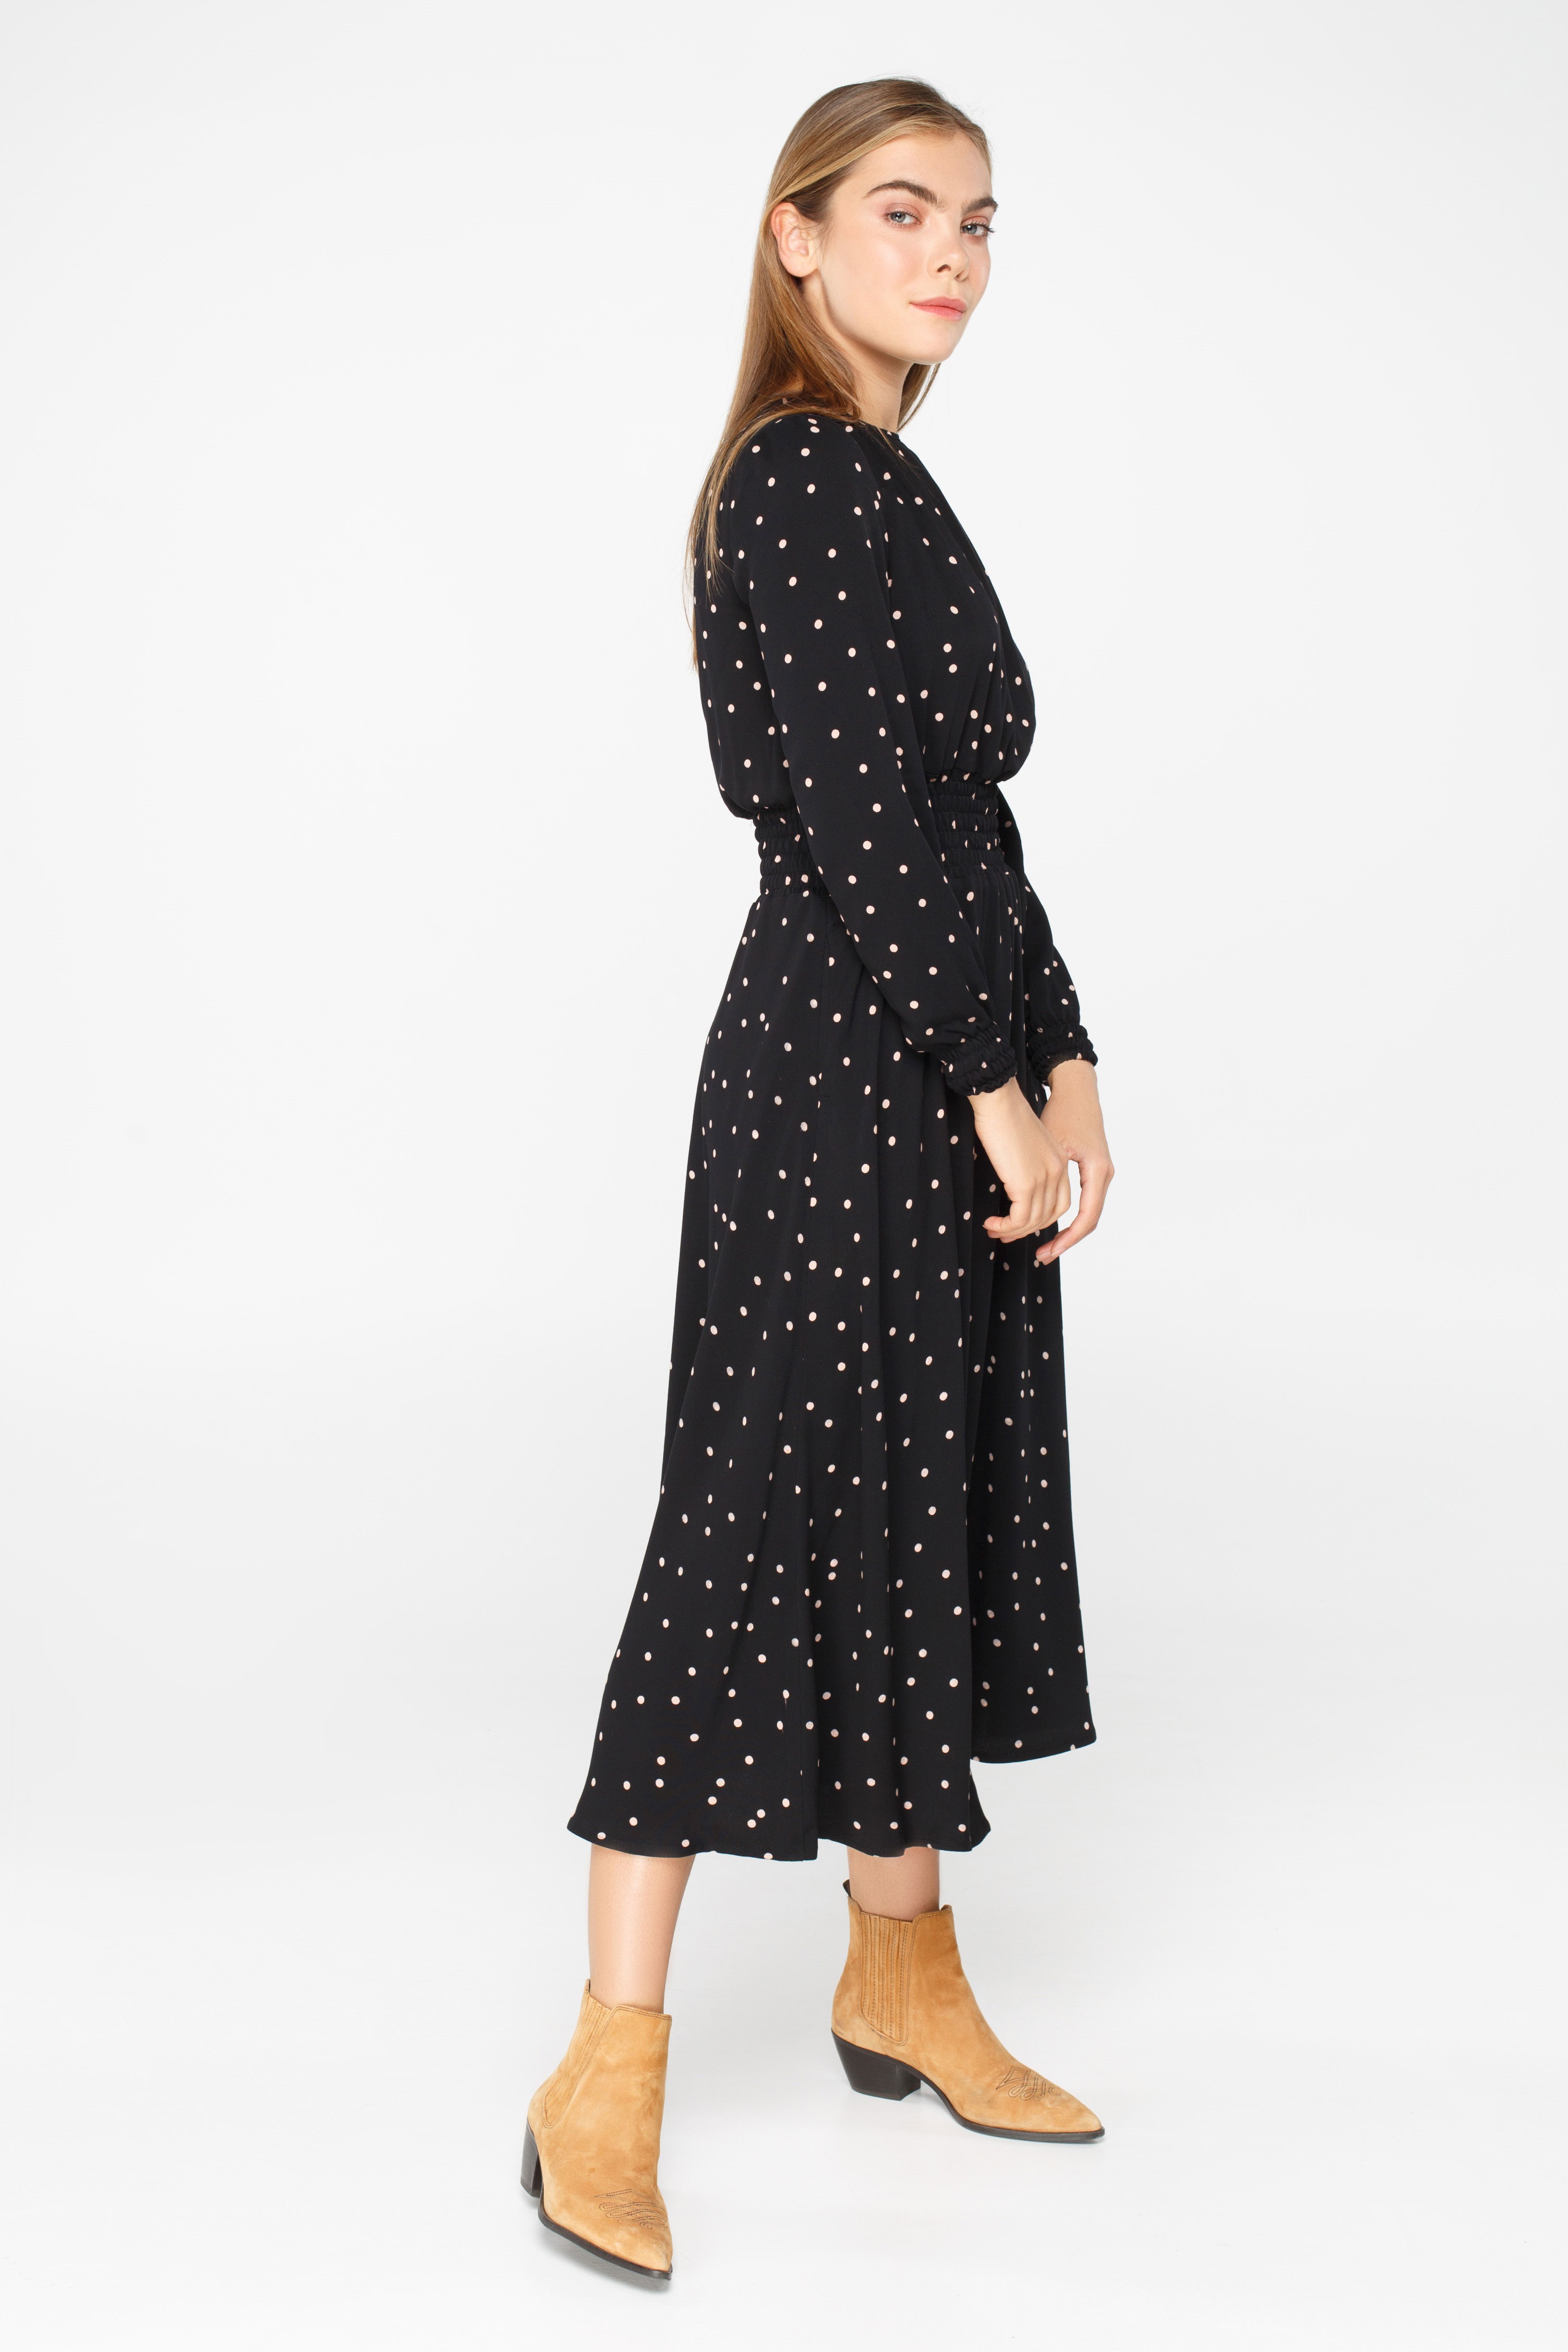 Black polka dot midi dress with elastic waist and cuffs , photo 4